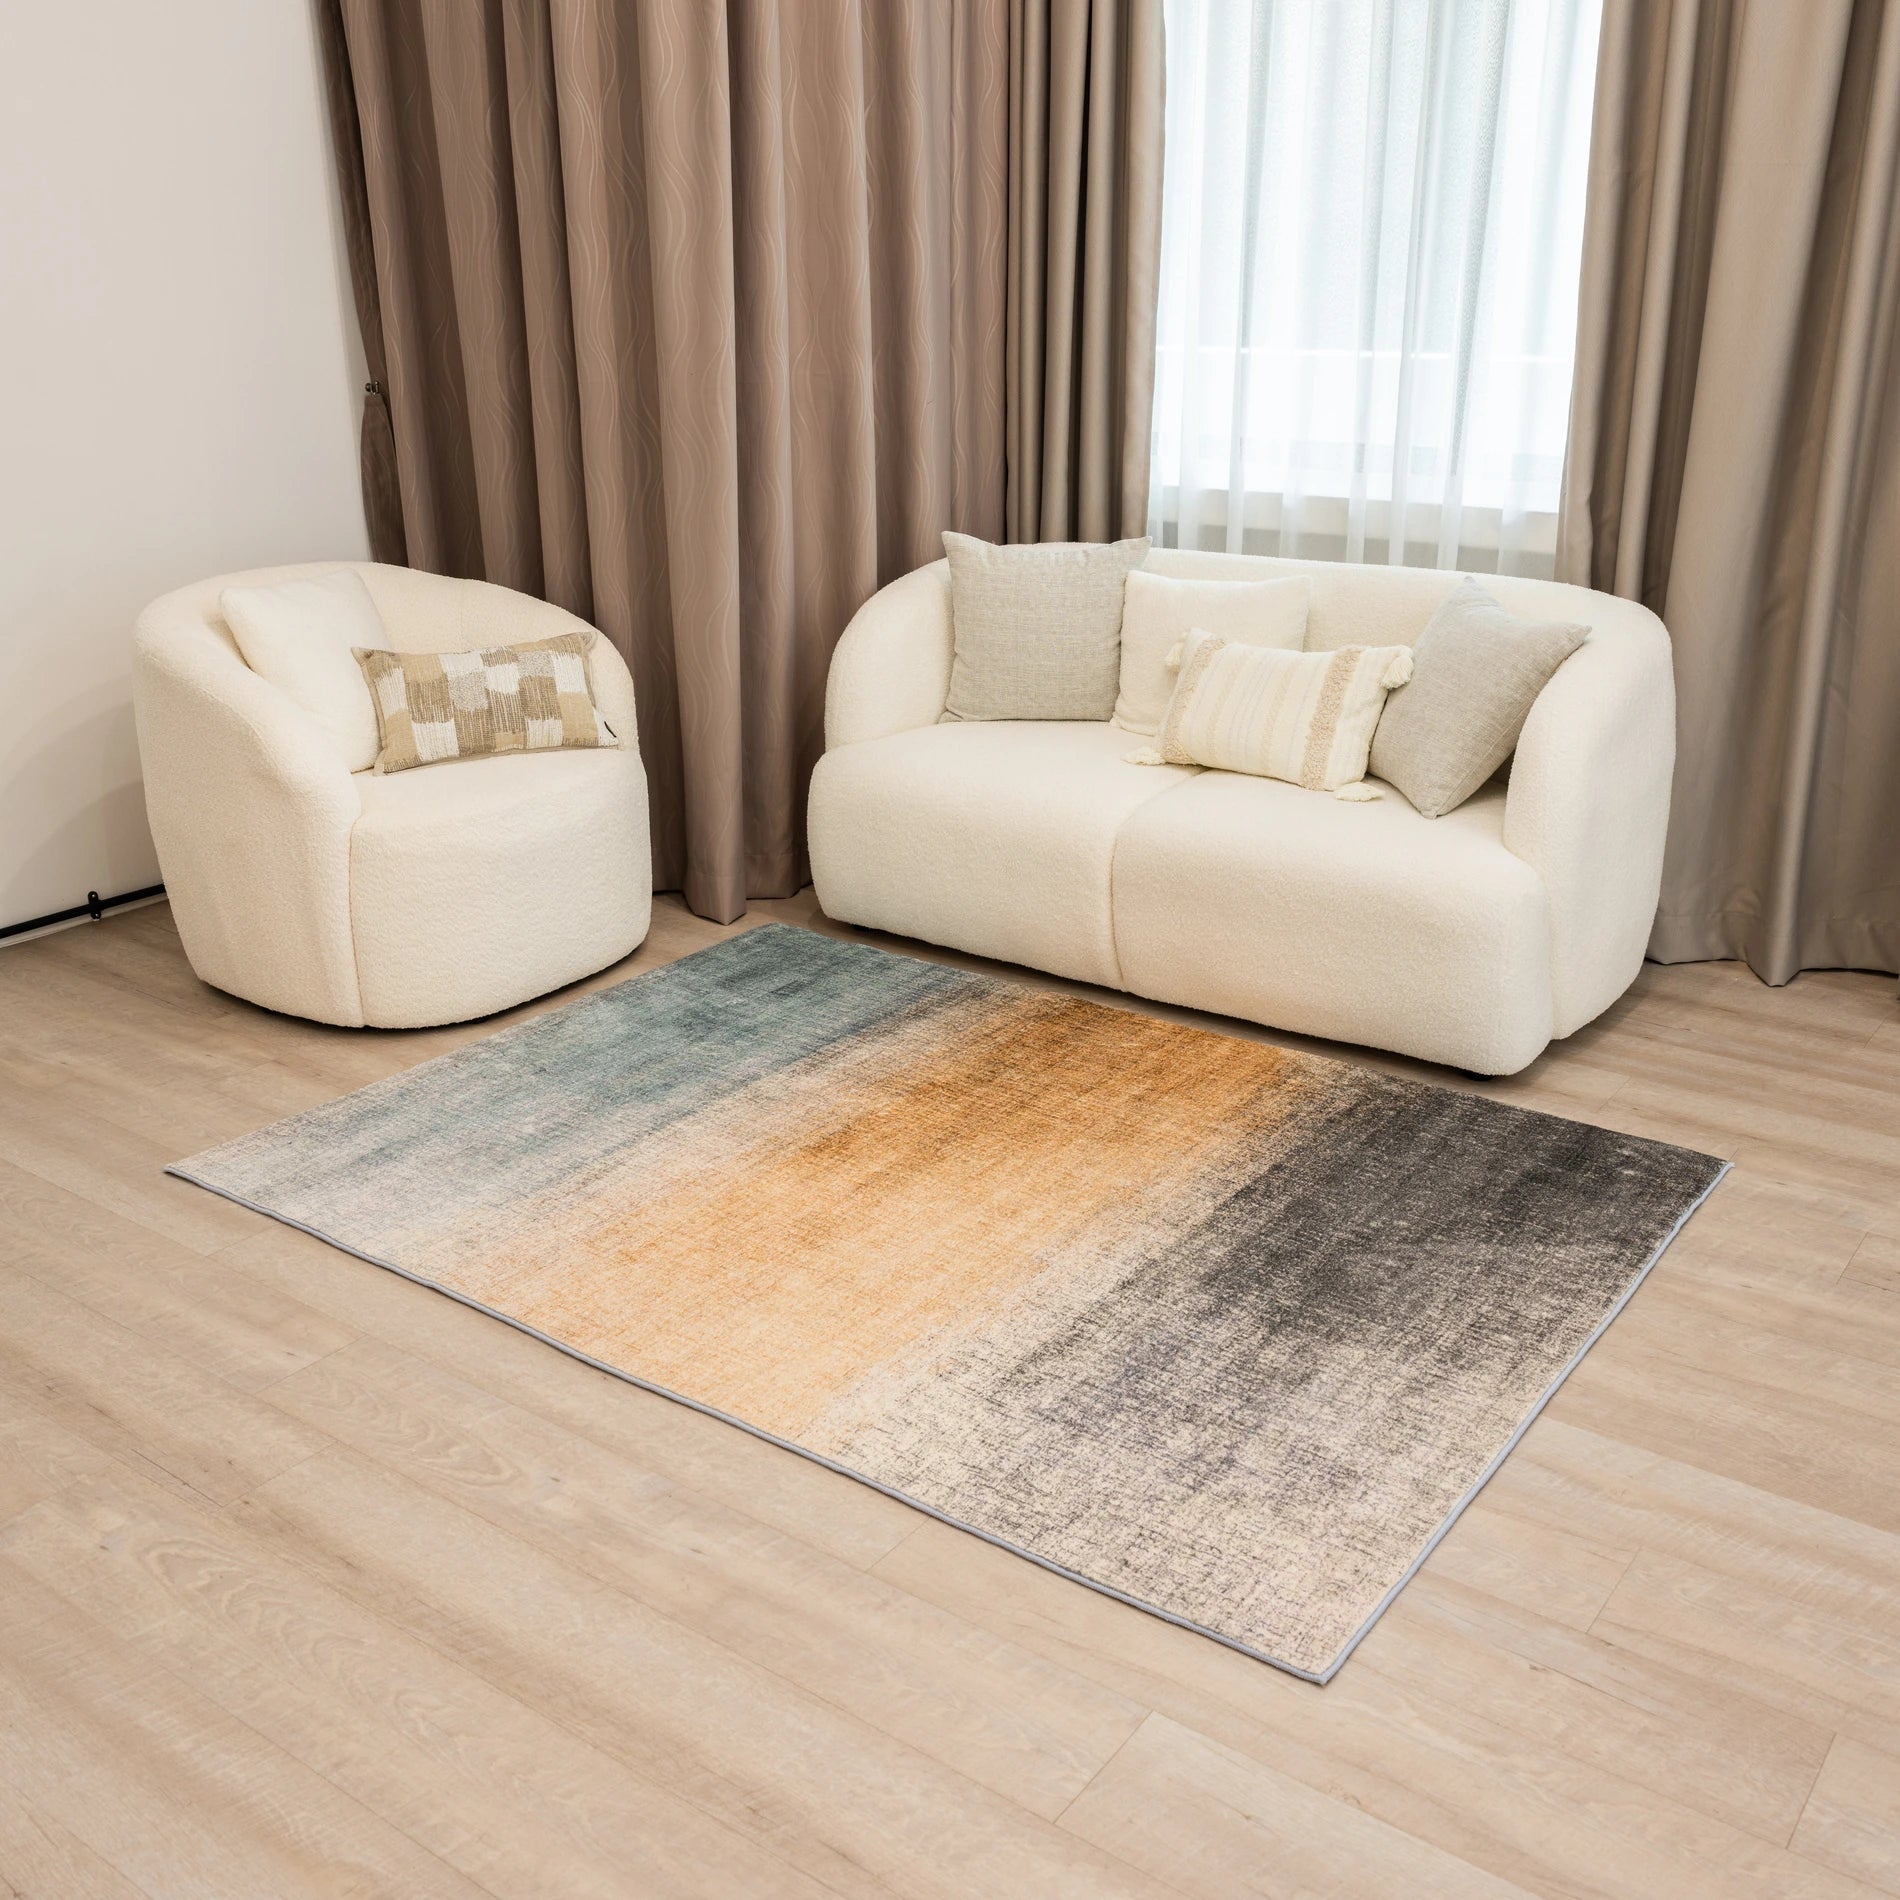 M-2093 Modern Carpet - The Carpetier™